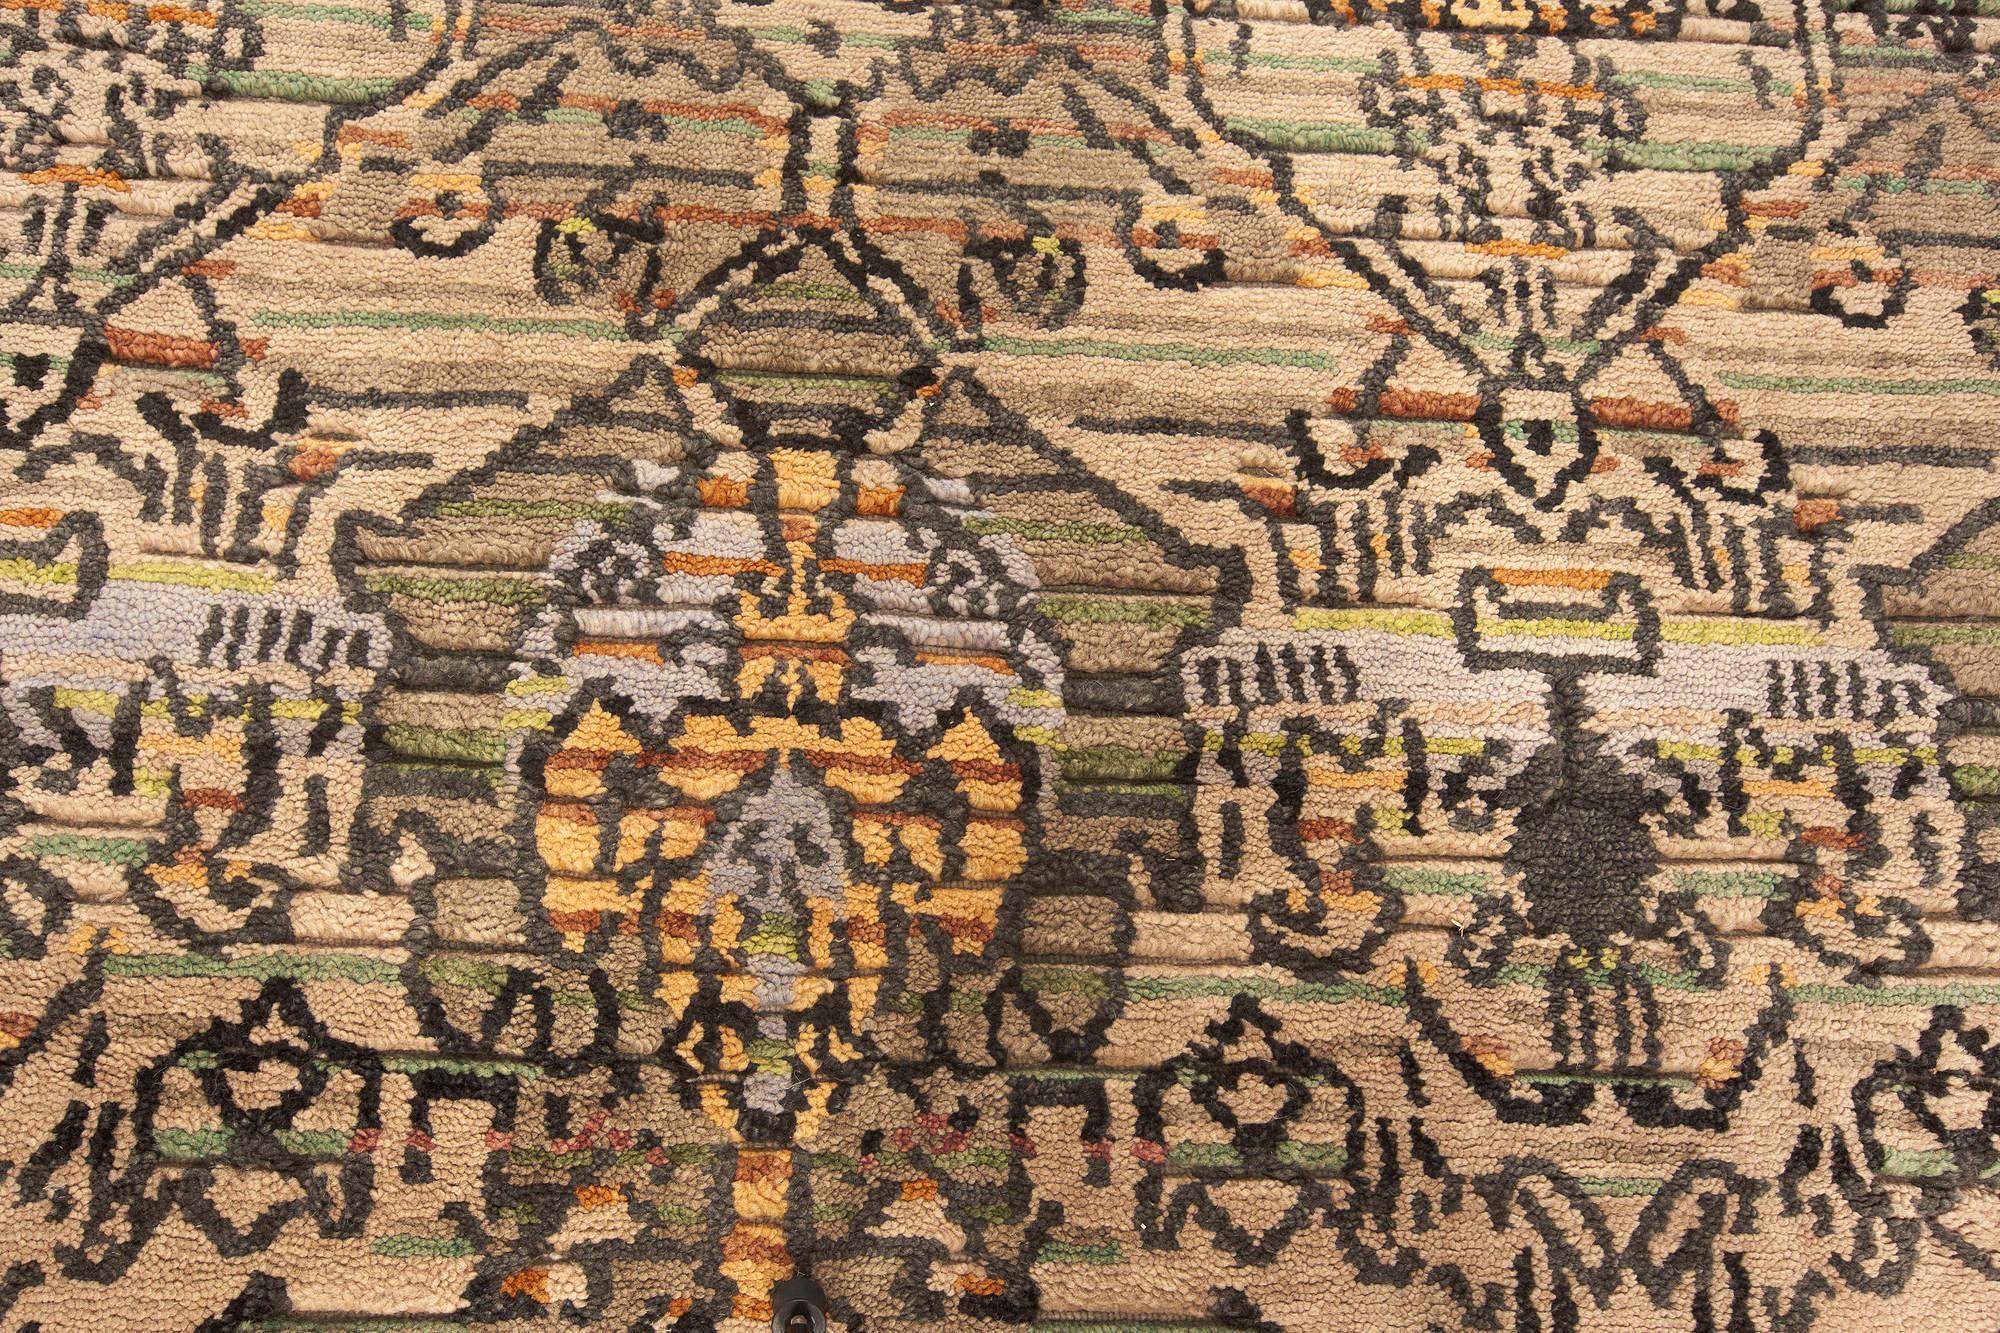 High-quality Modern Samara handmade wool rug by Doris Leslie Blau
Size: 12'1